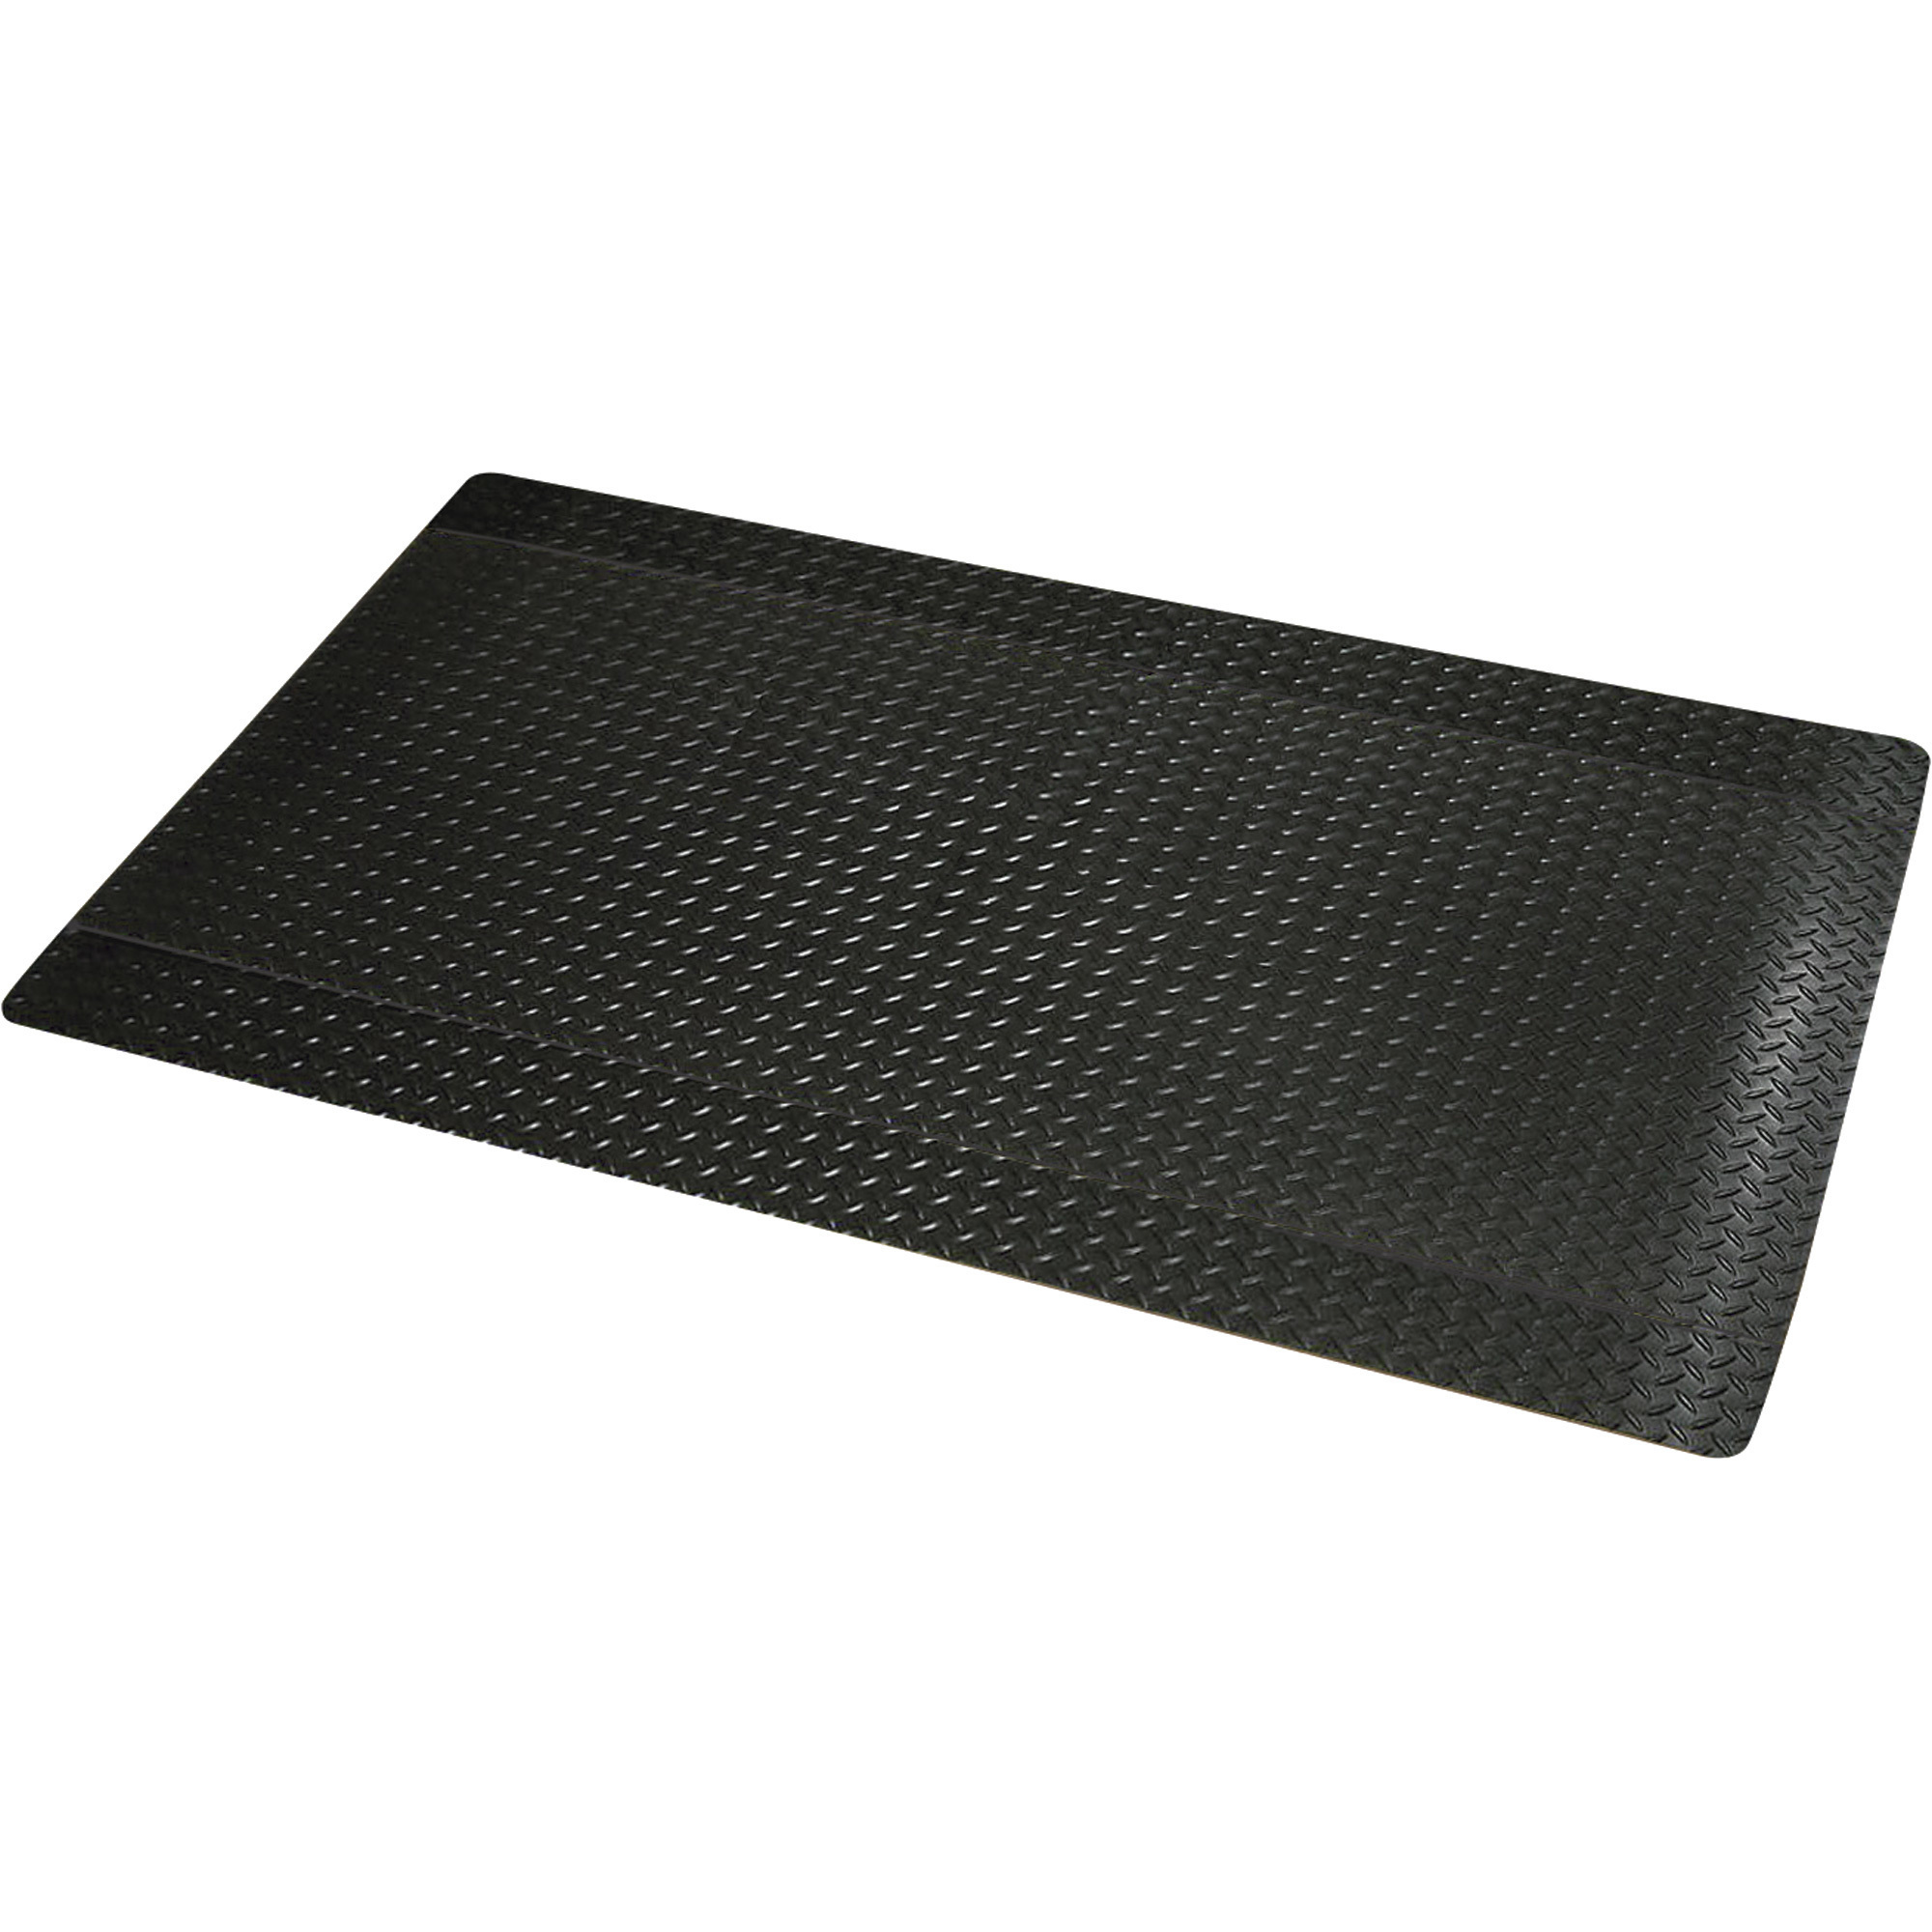 NoTrax Cushion Trax Ultra Floor Mat â 2ft. x 3ft., Black, Model 975S0023BL